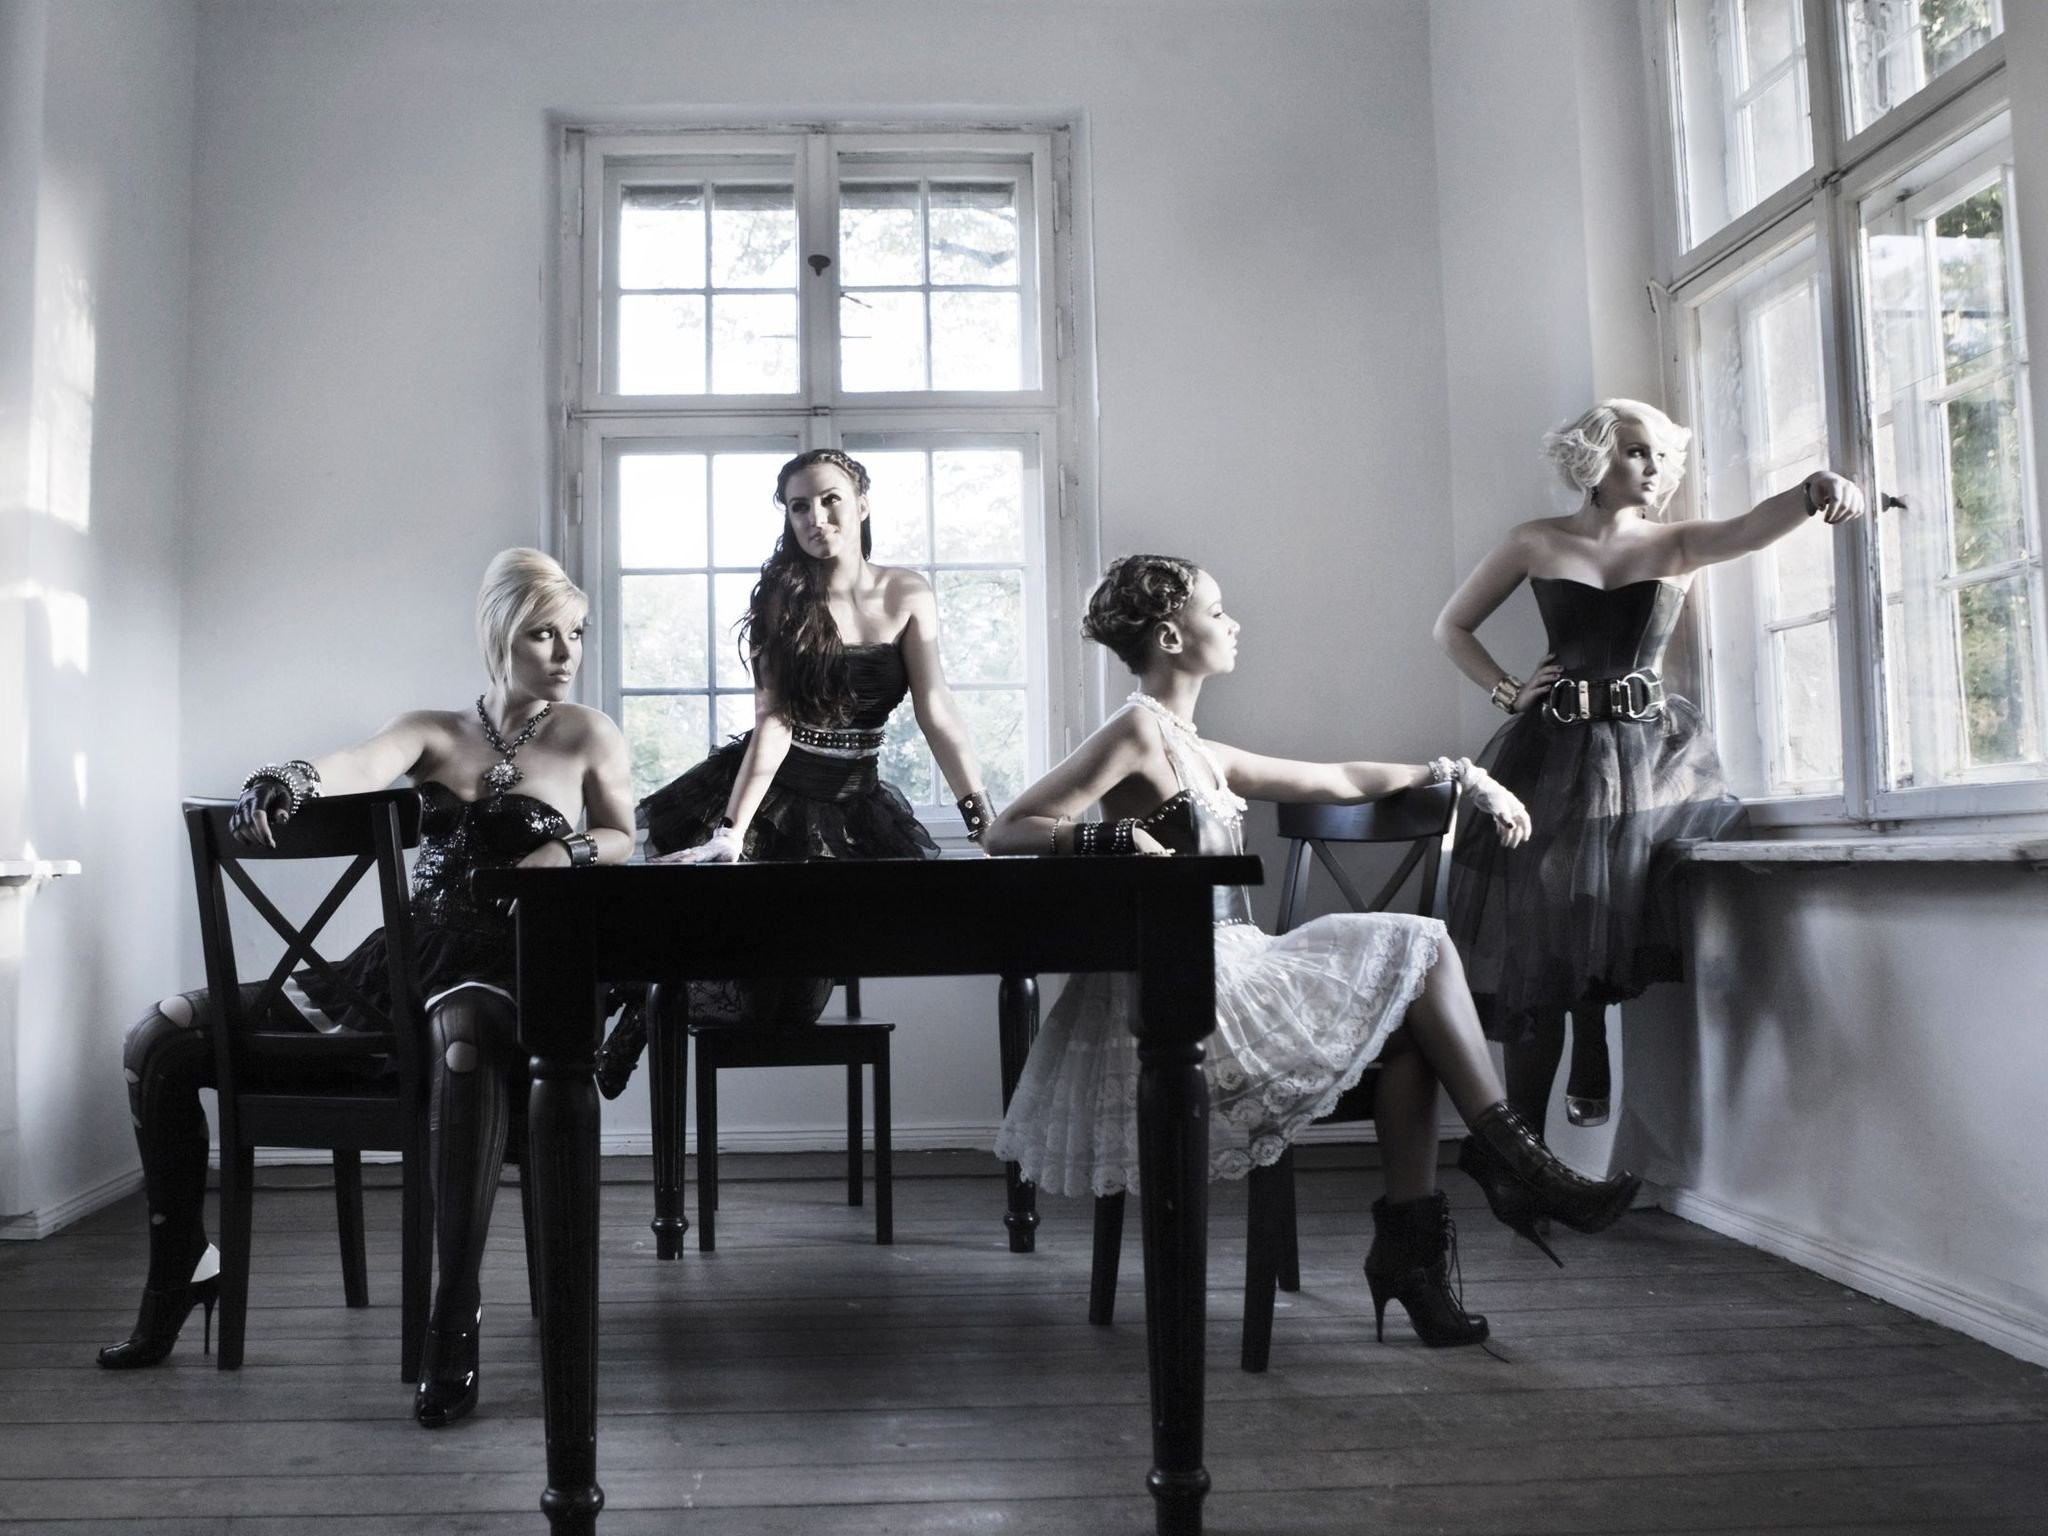 People 2048x1536 women table chair women quartet window dress sitting group of women model women indoors leaning room heels necklace legs